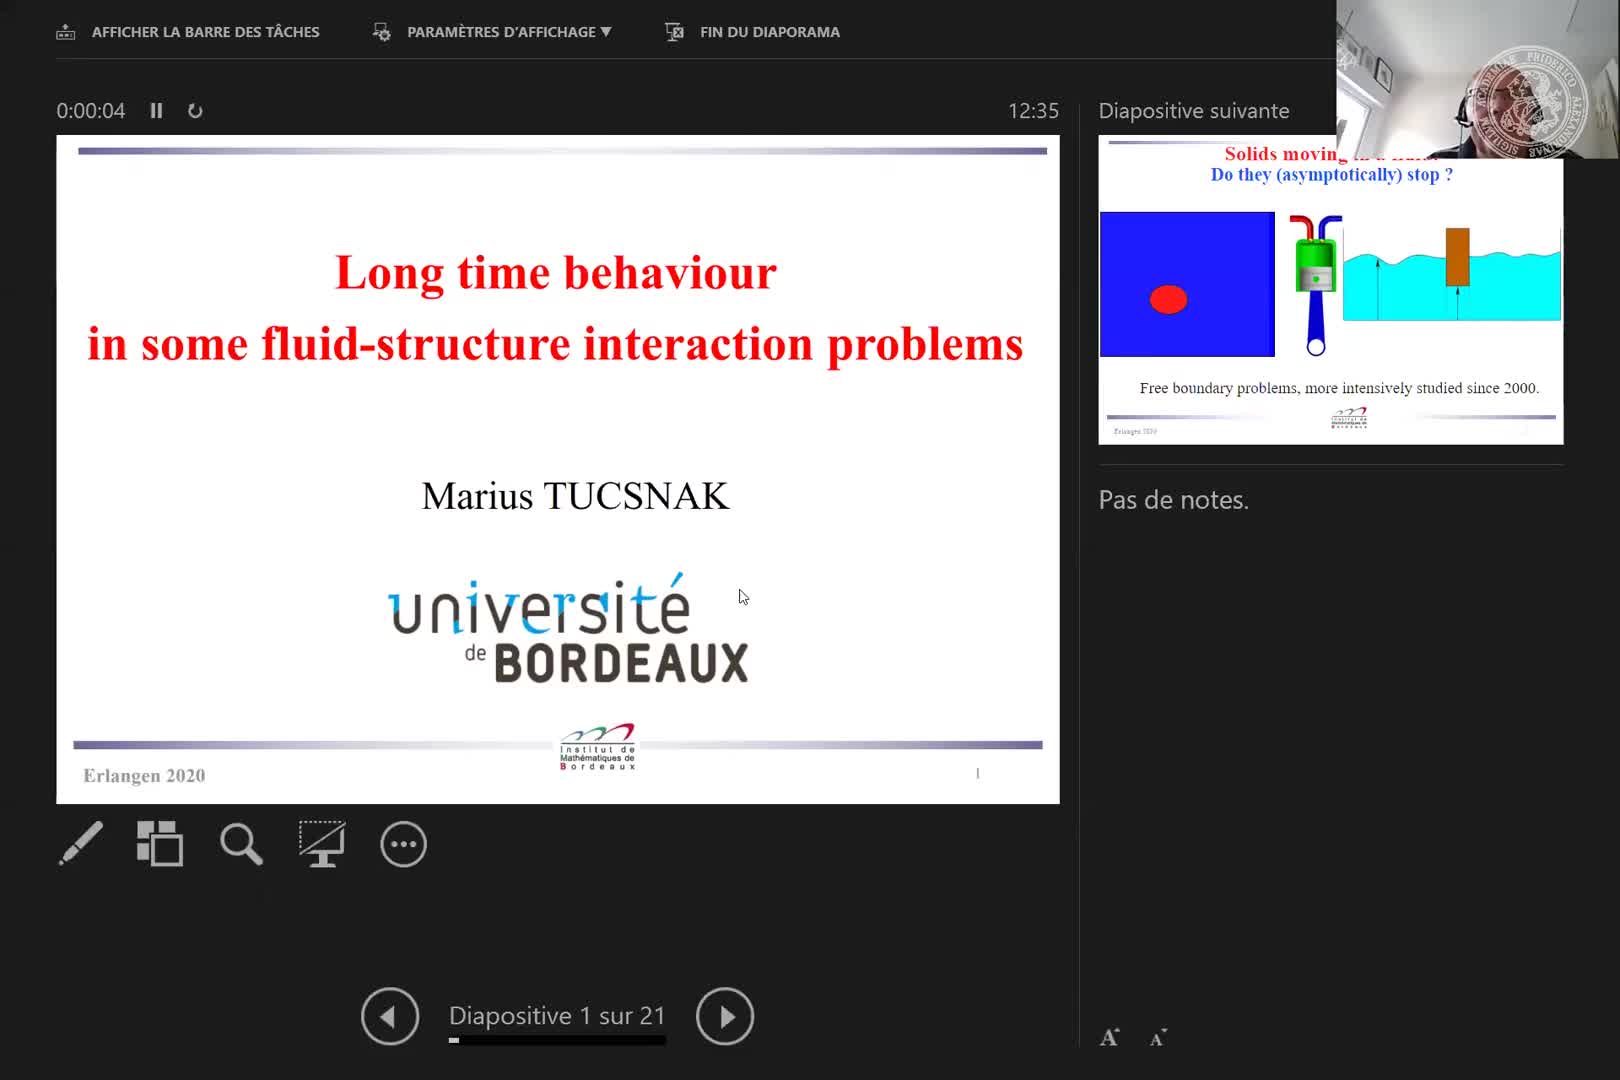 Large time behavior in some fluid-interaction problems (Marius Tuscnak, Uni Bordeaux) preview image